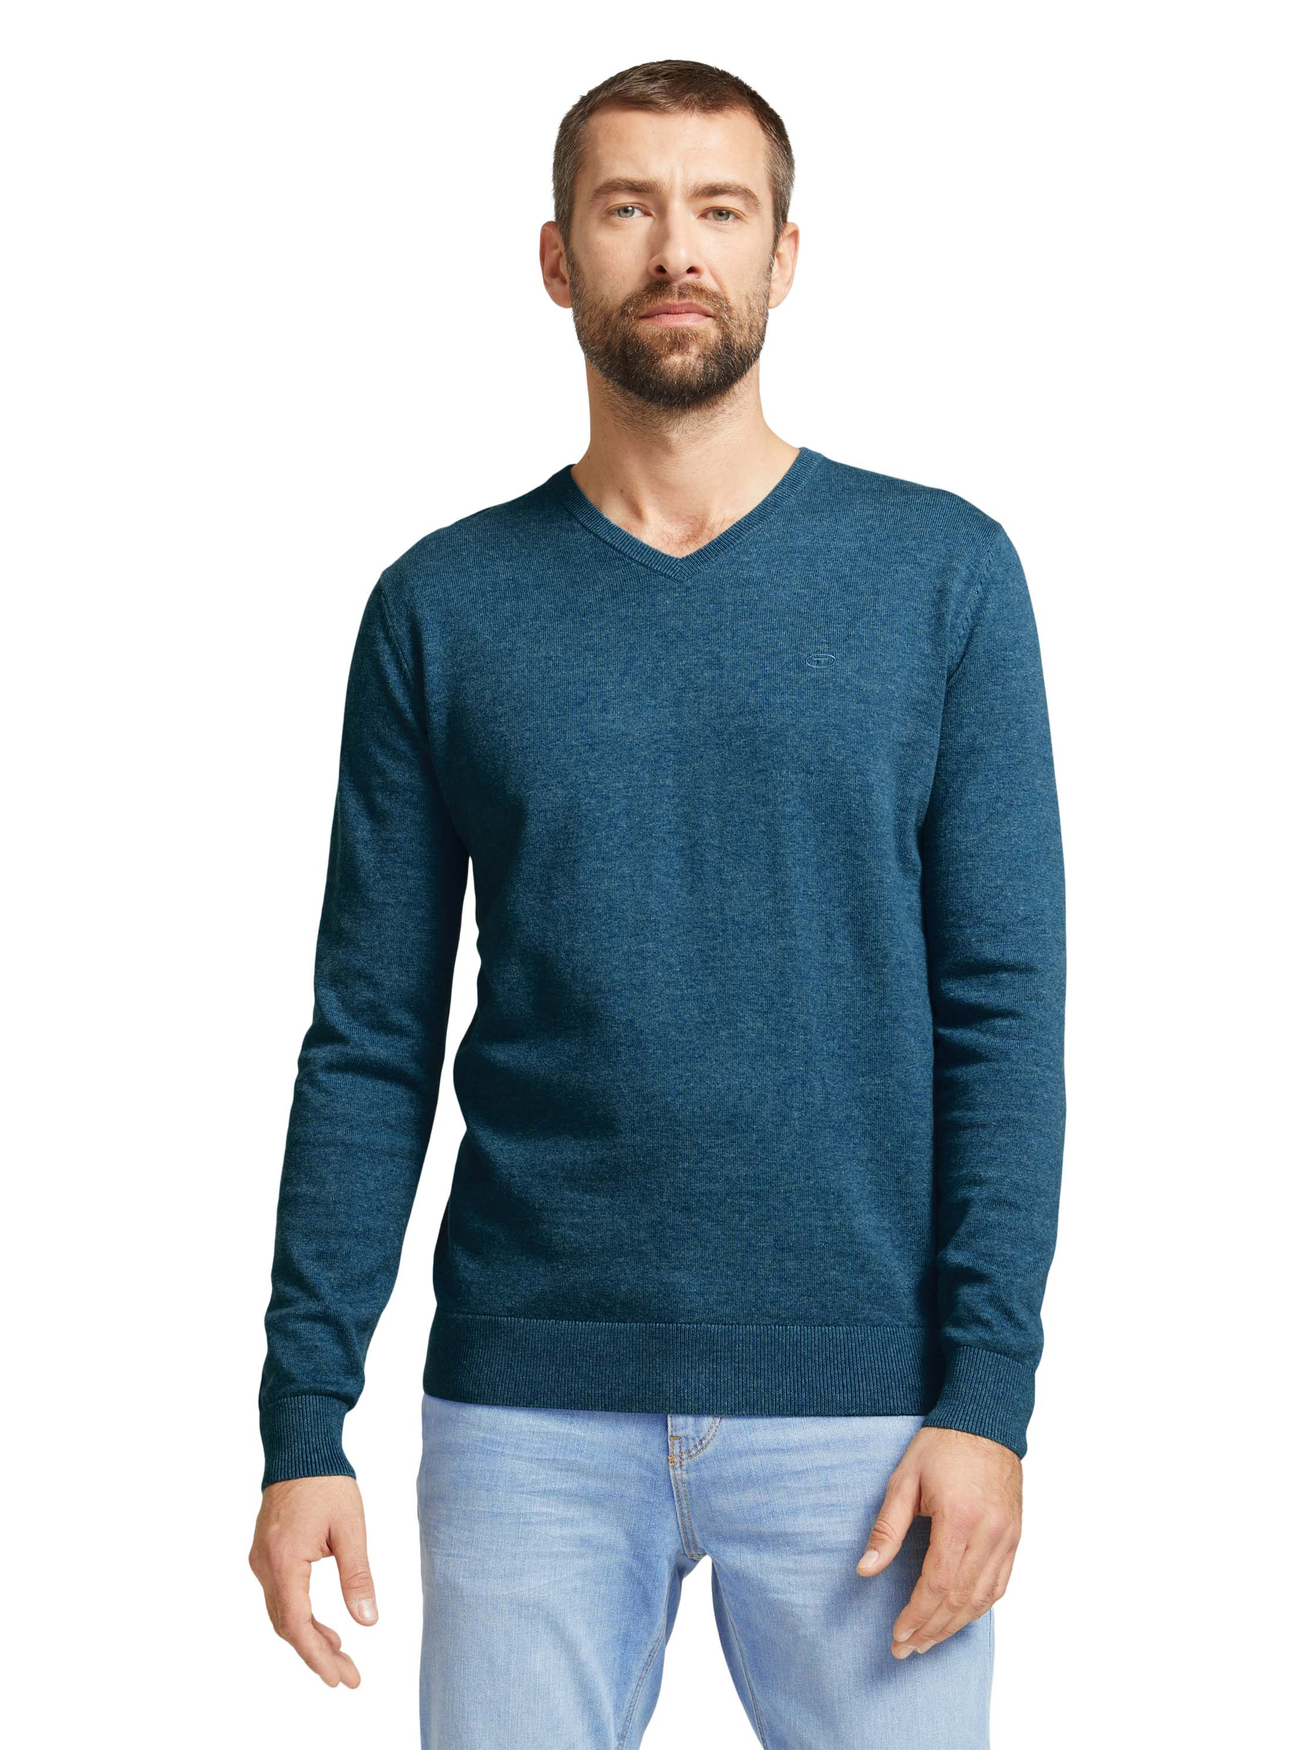 Пуловер Tom Tailor Feinstrick Langarm Basic Sweater V Neck Jumper, синий пуловер tom tailor dünner feinstrick basic v ausschnitt sweater коричневый